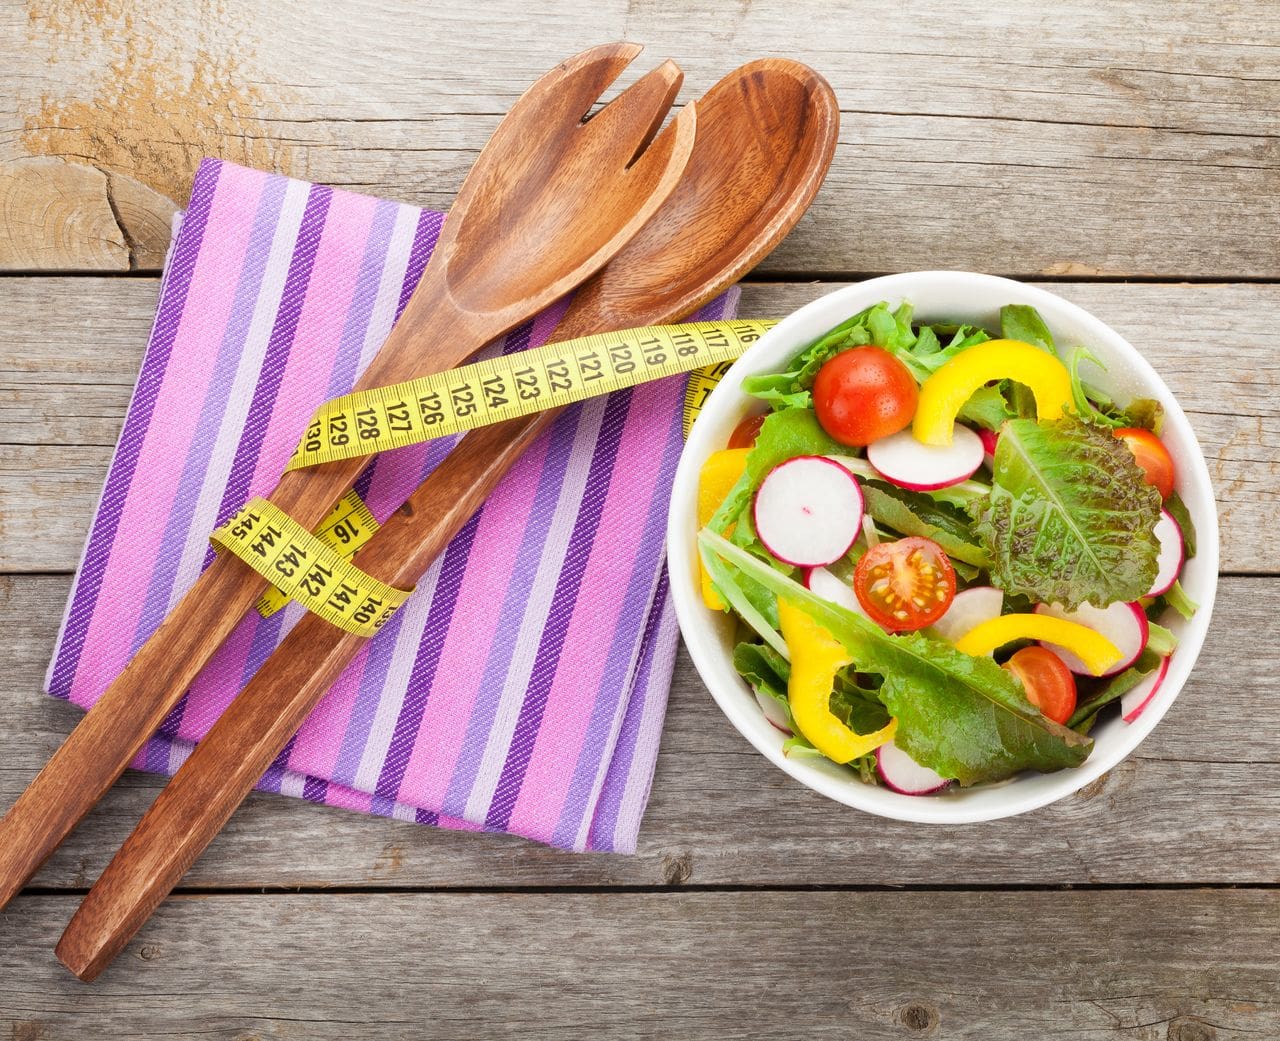 ranking diet jaką stosować dietę aby schudnąć?